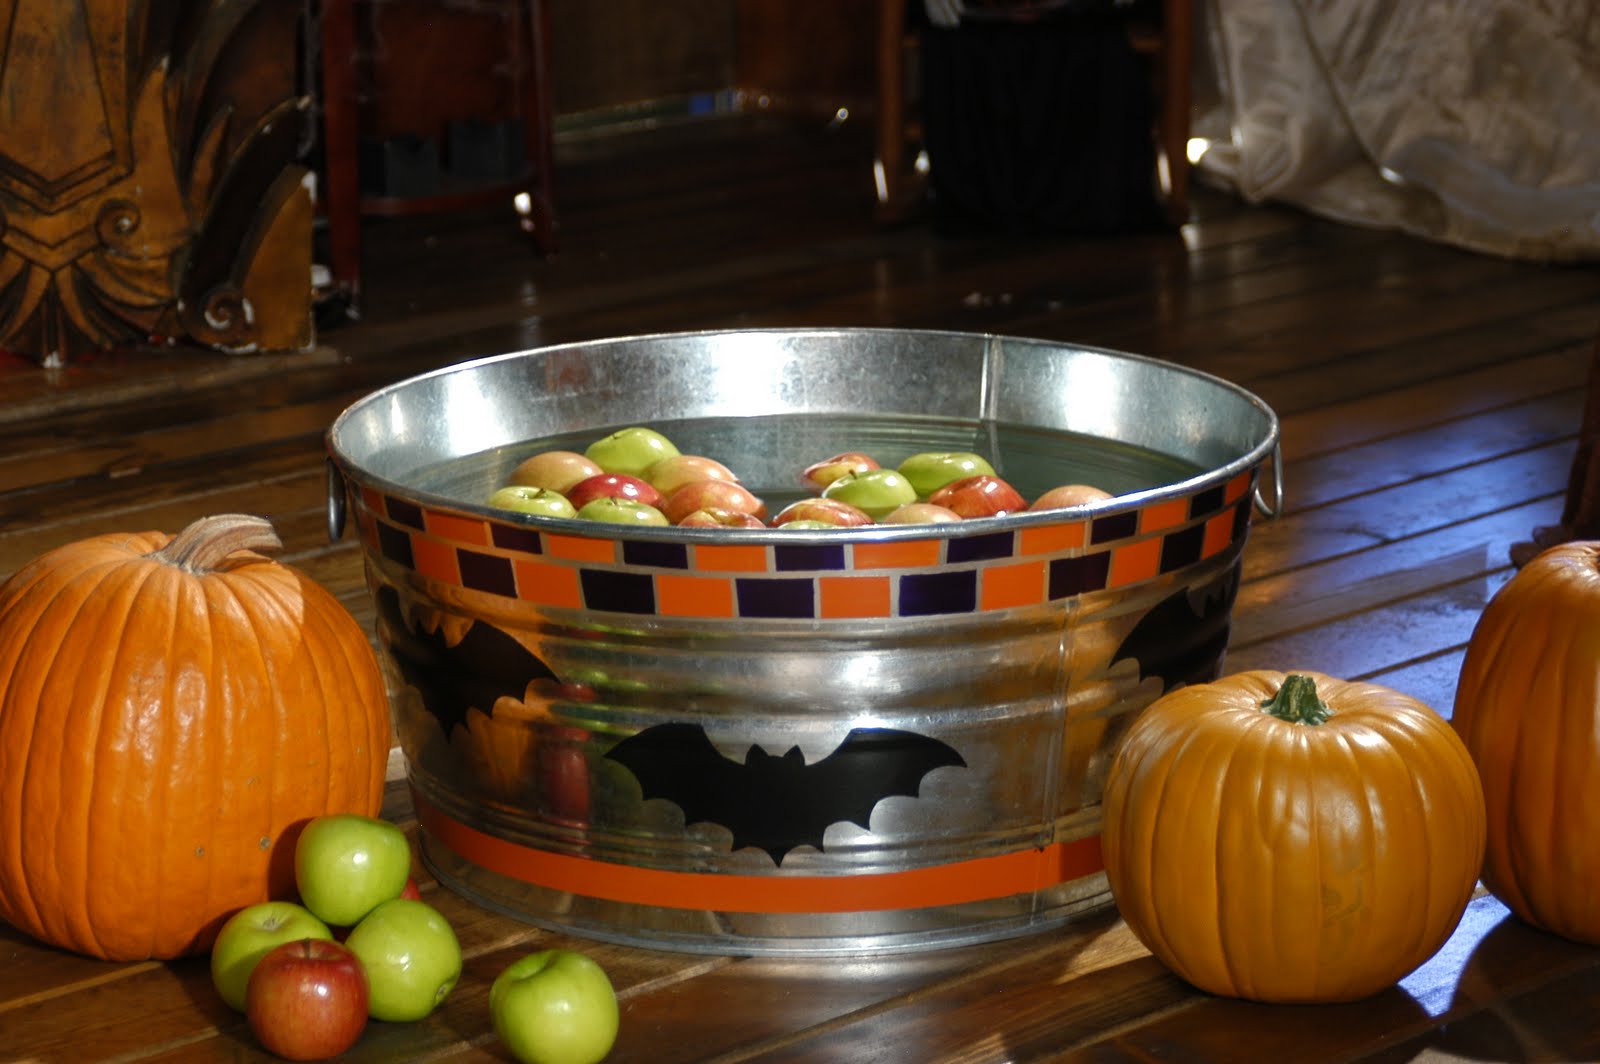 Bill Jackson http://handmadehappyhour.com/2010/10/13/halloween-witch-crafts-apple-bobbing-tub/